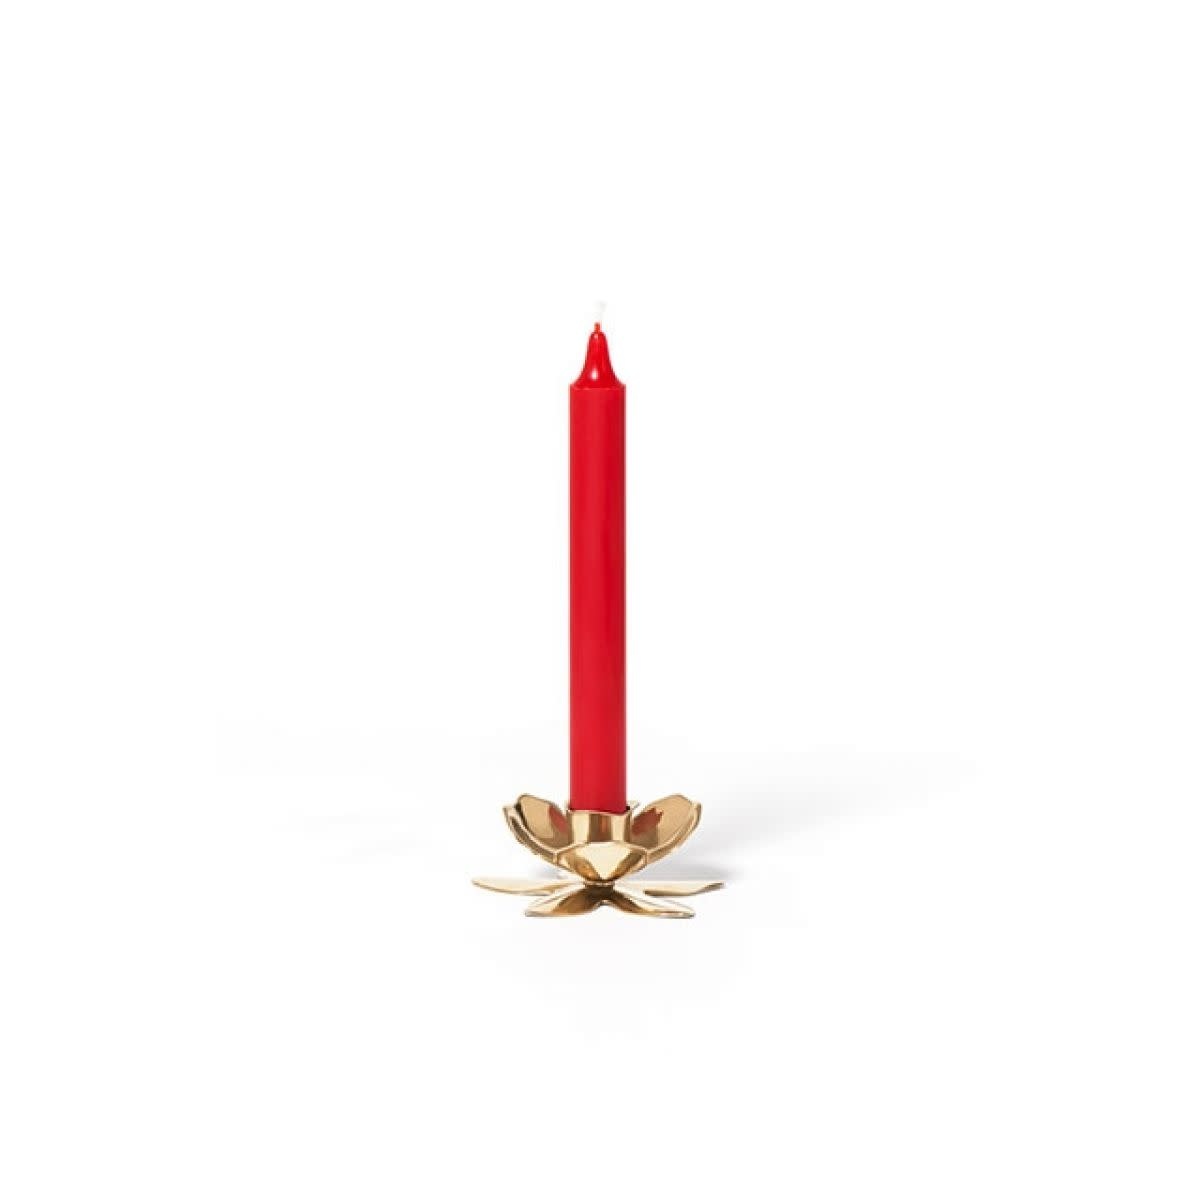 Maison Lipari Flower Candlestick Gold Plated  CIRE TRUDON.